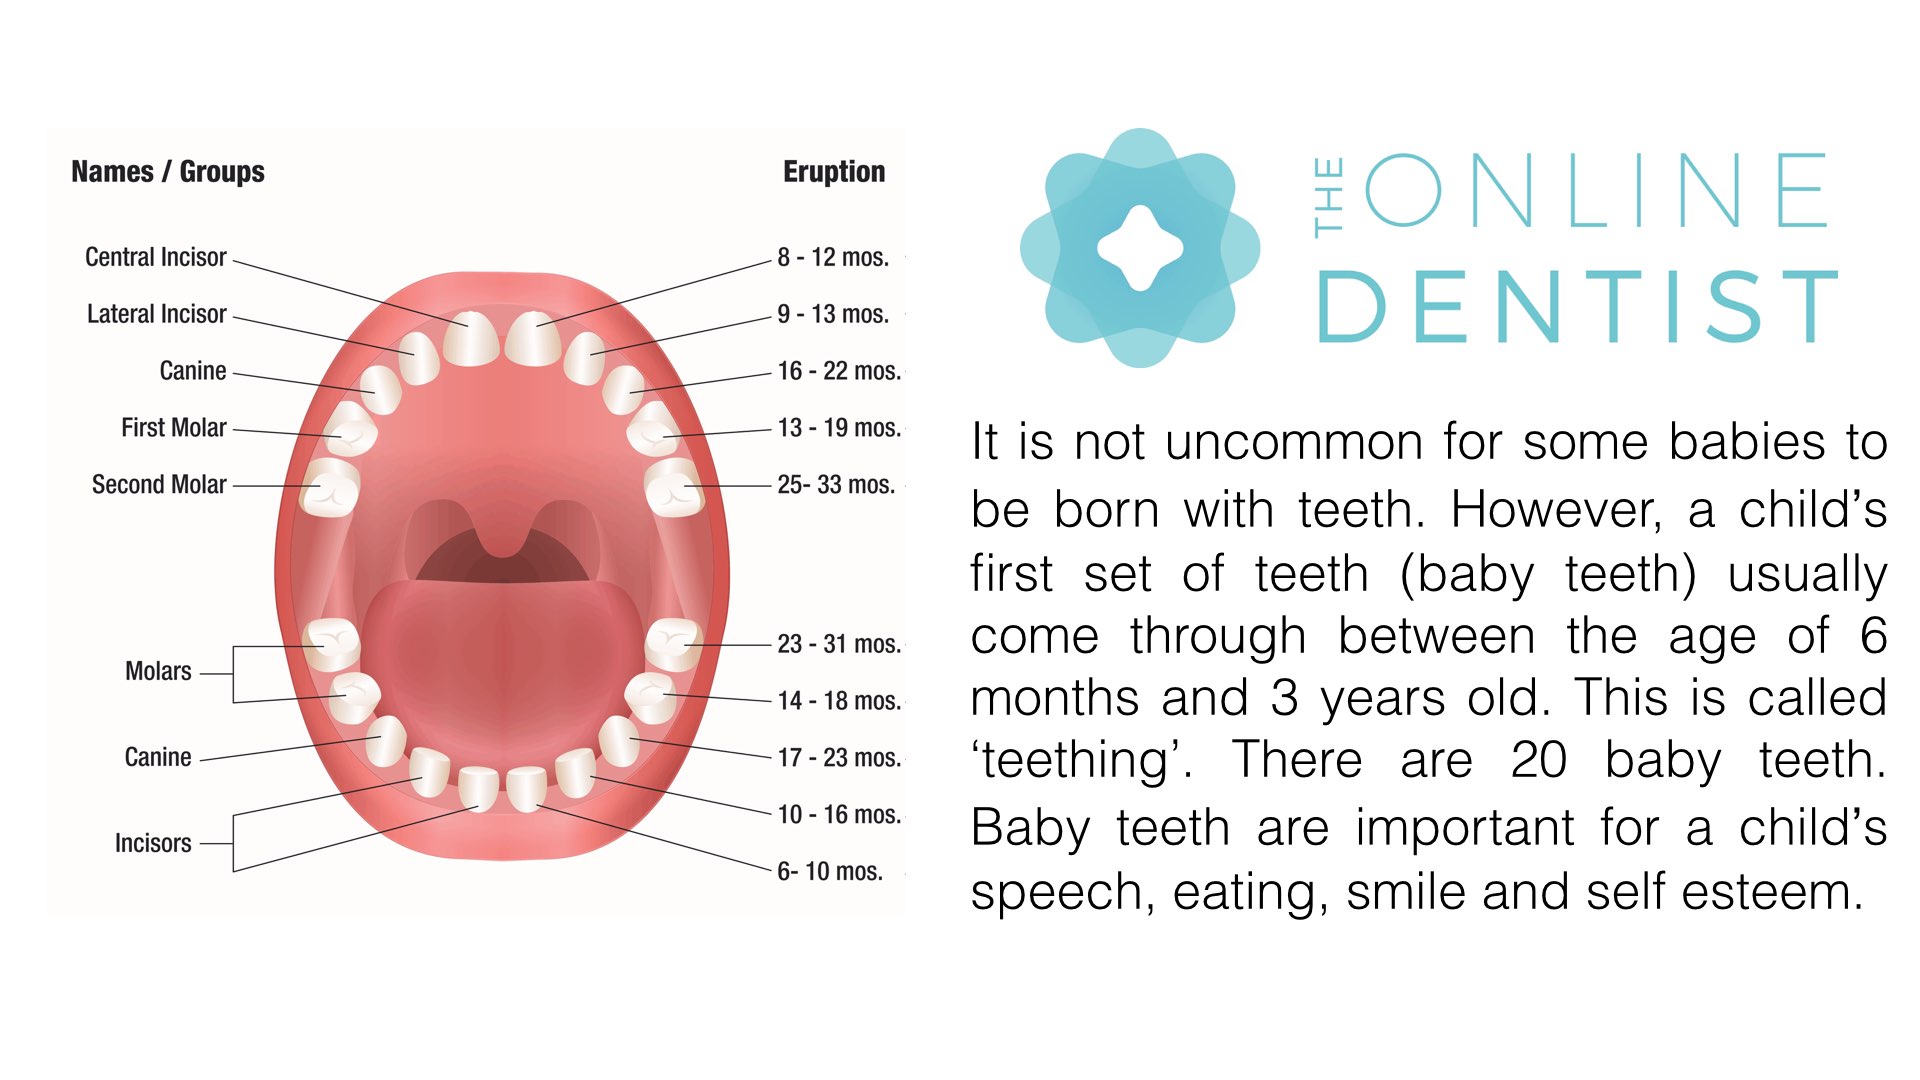 Baby teeth eruption dates by The Online Dentist